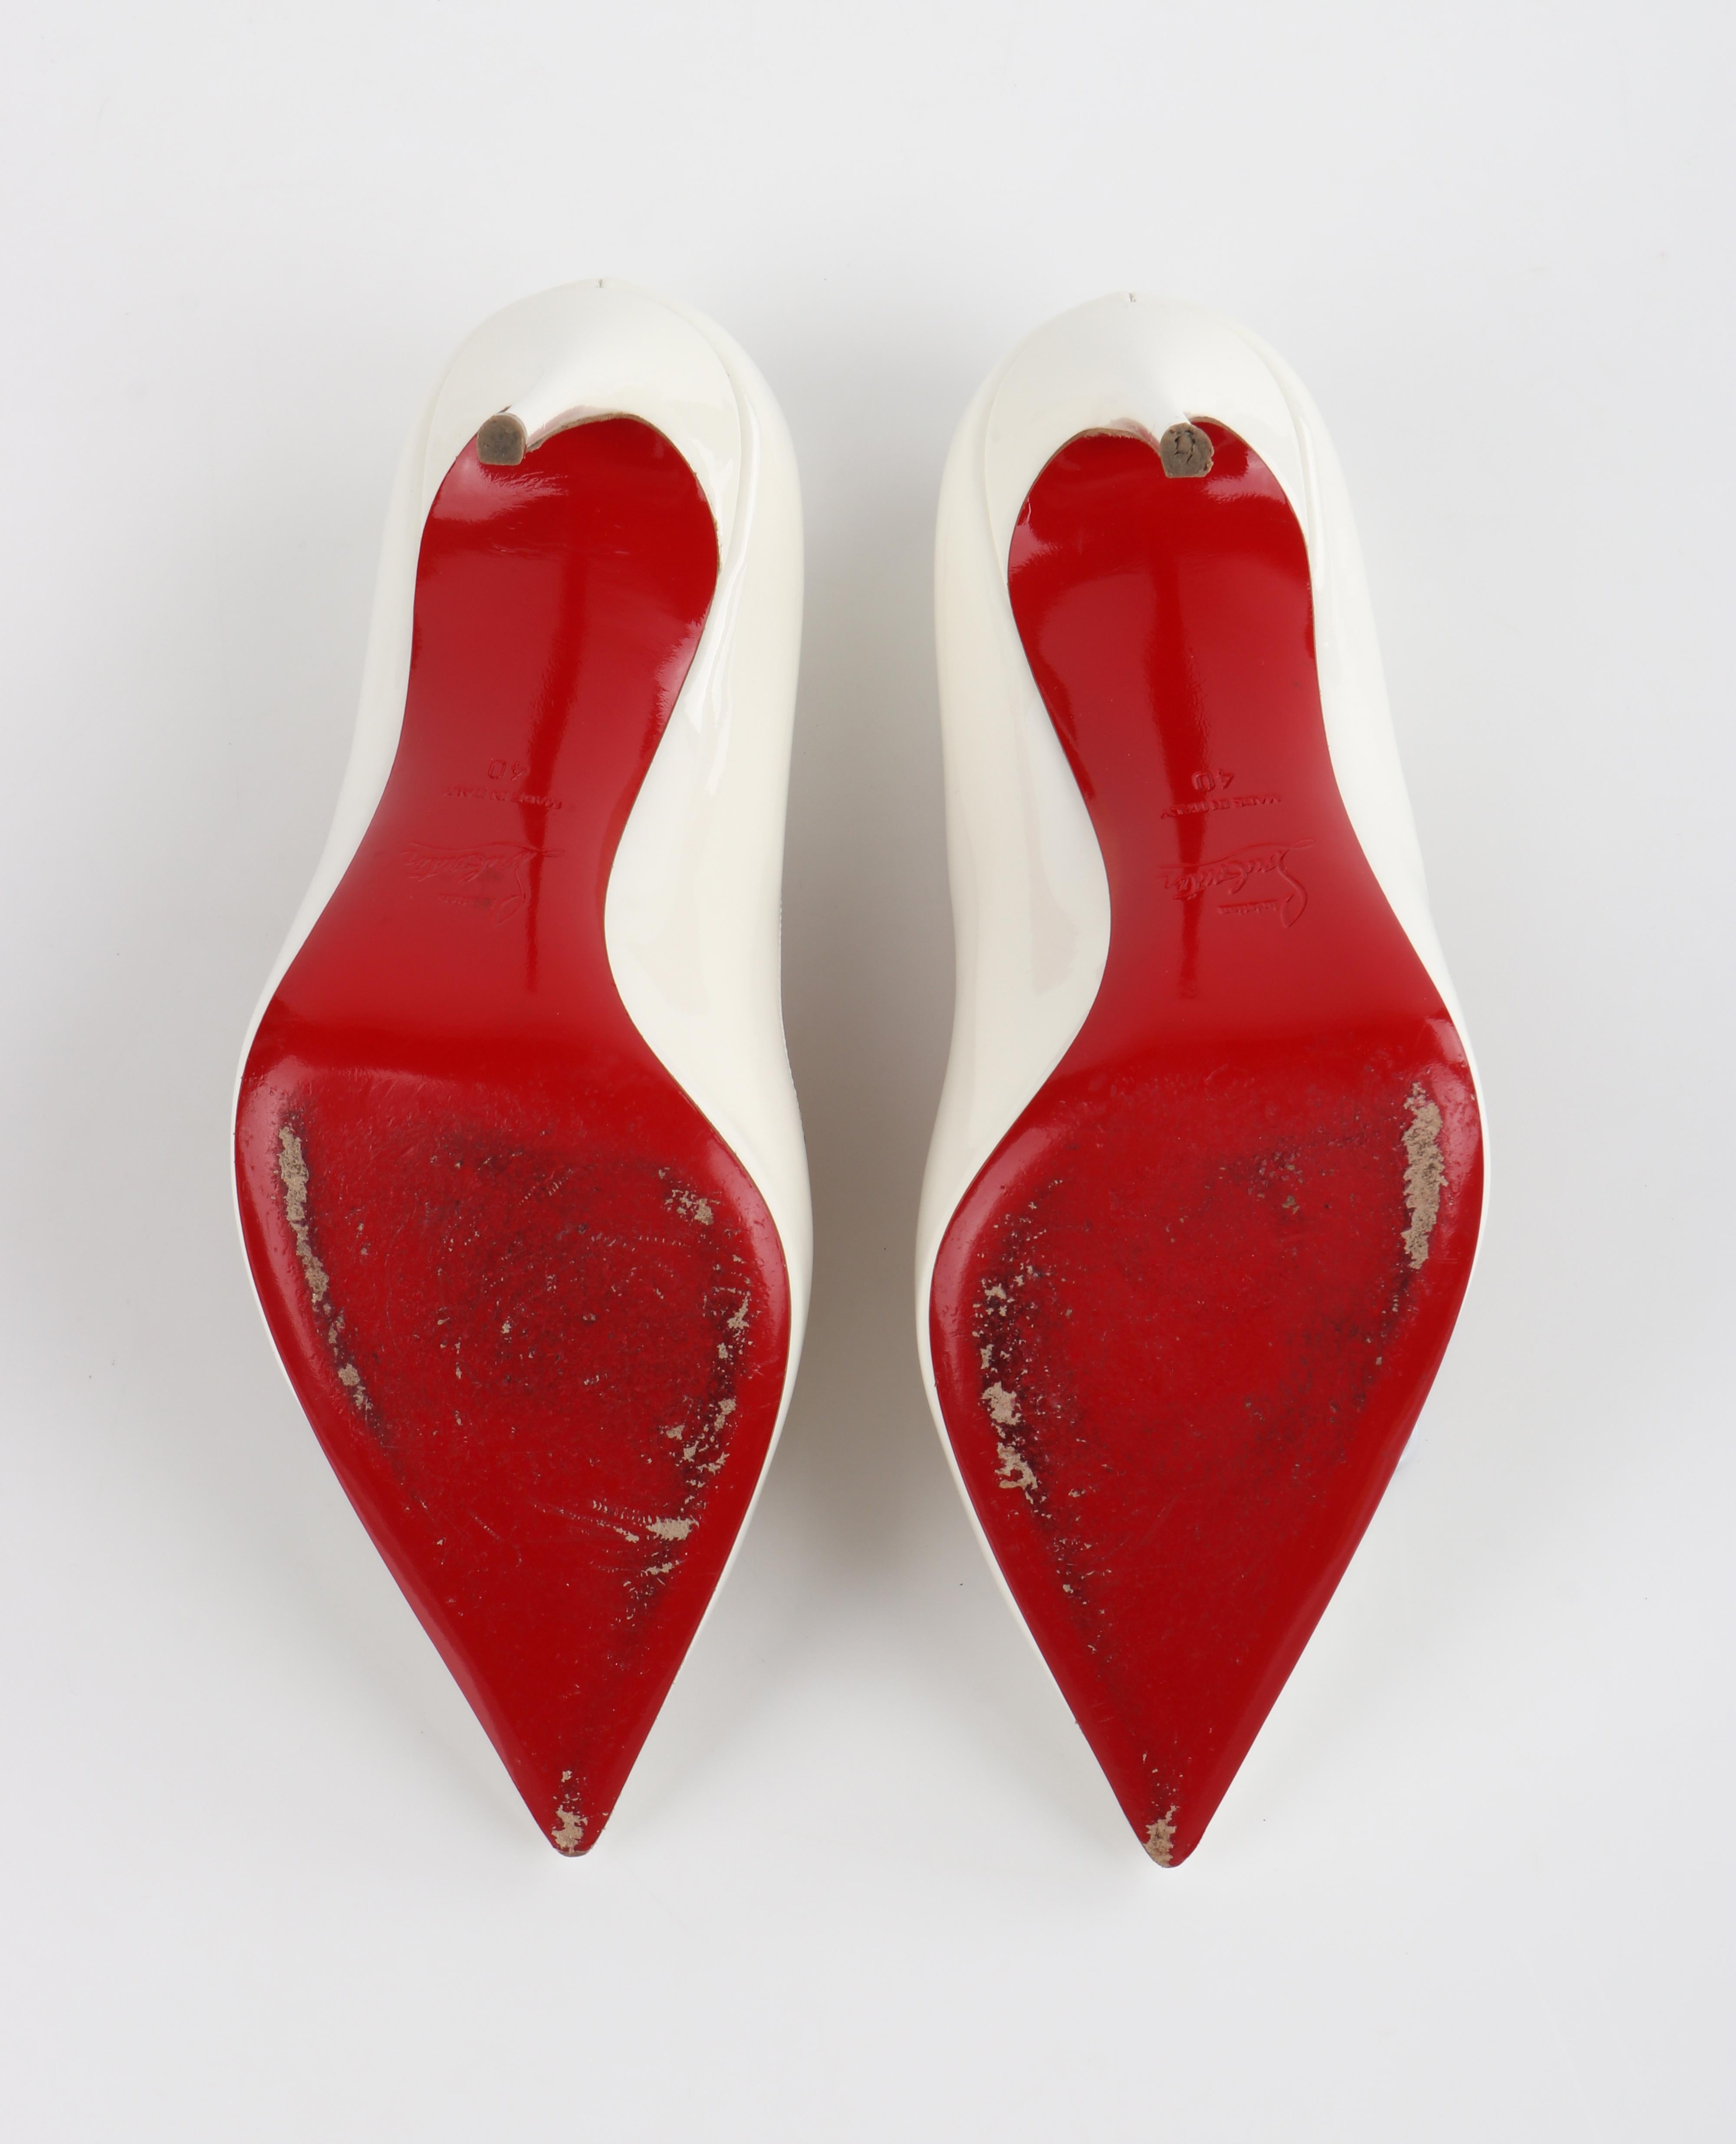 CHRISTIAN LOUBOUTIN “So Kate” 120 White Patent Leather Stiletto High Heel Pumps 3